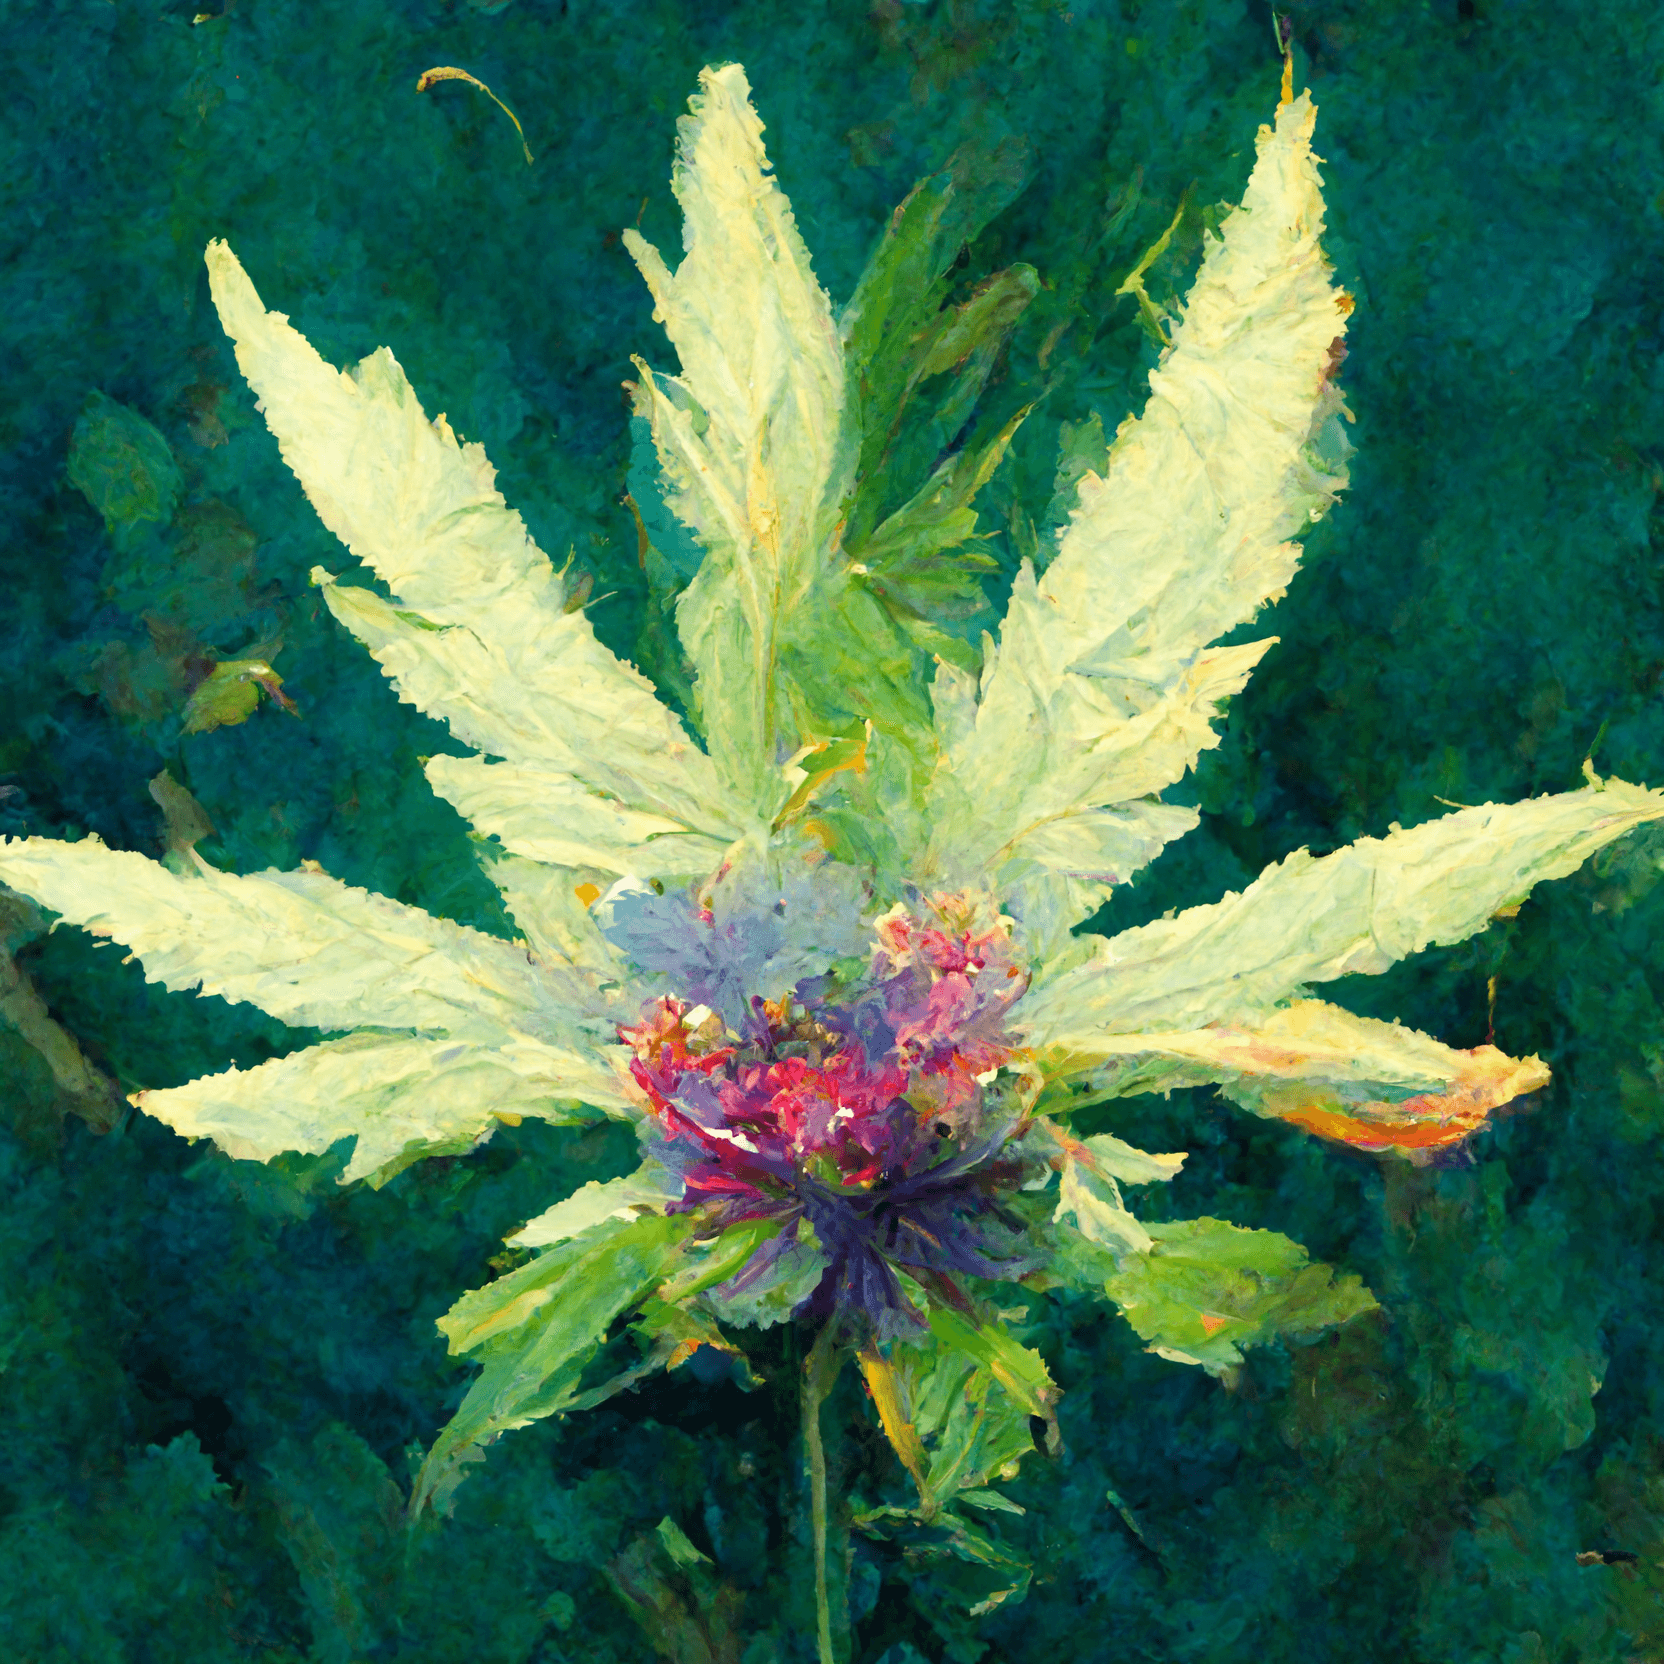 Cannabis Botanical Illustration in the style of Claude Monet - Goldleaf